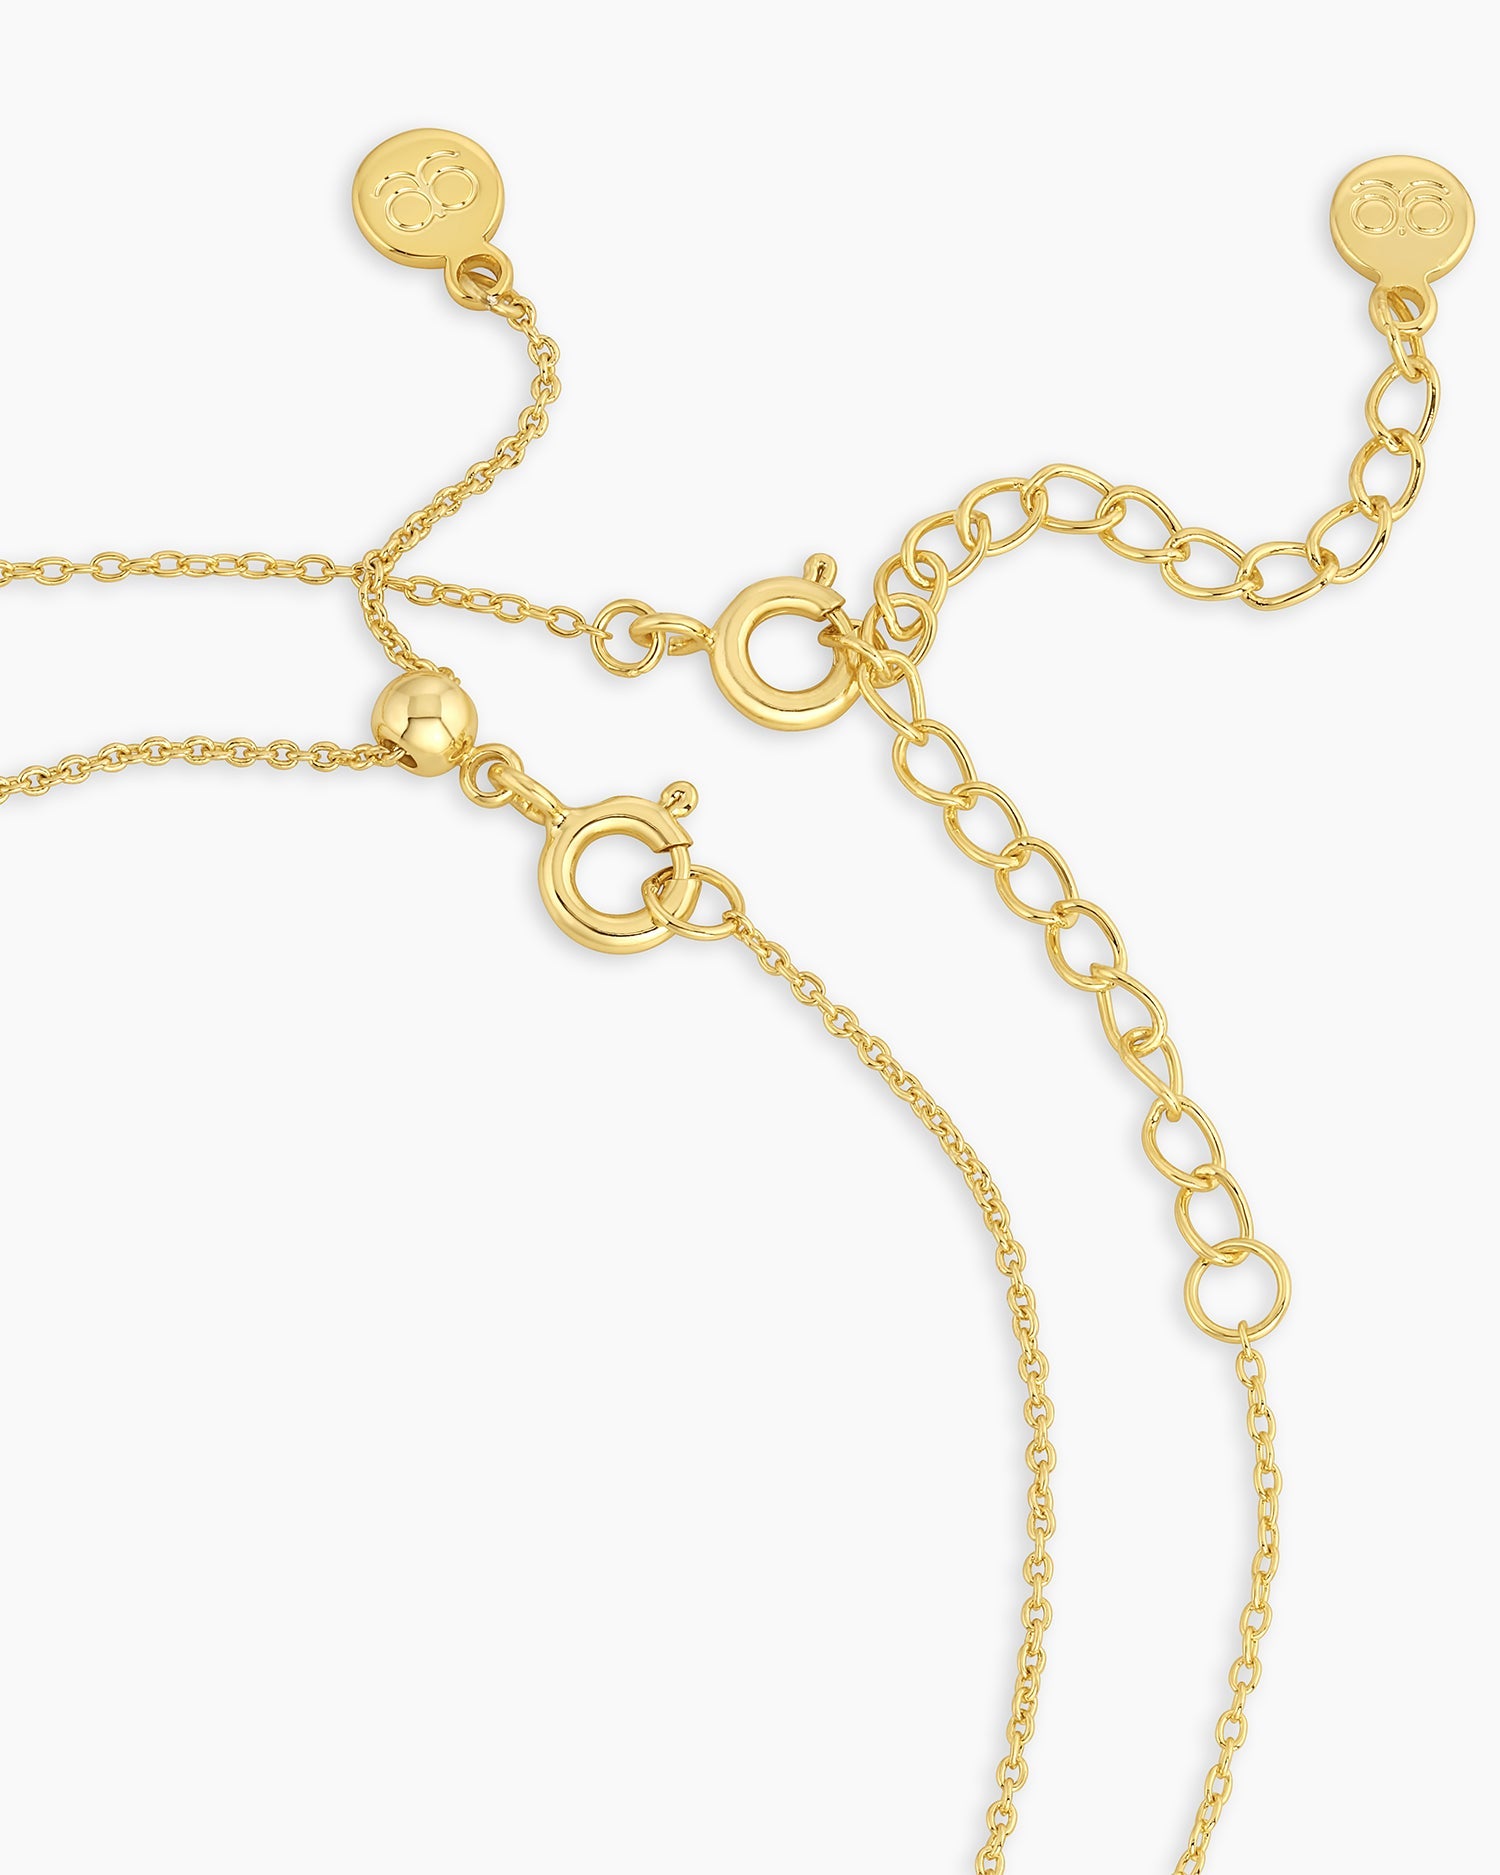 Gold Layer Necklaces Set - full set